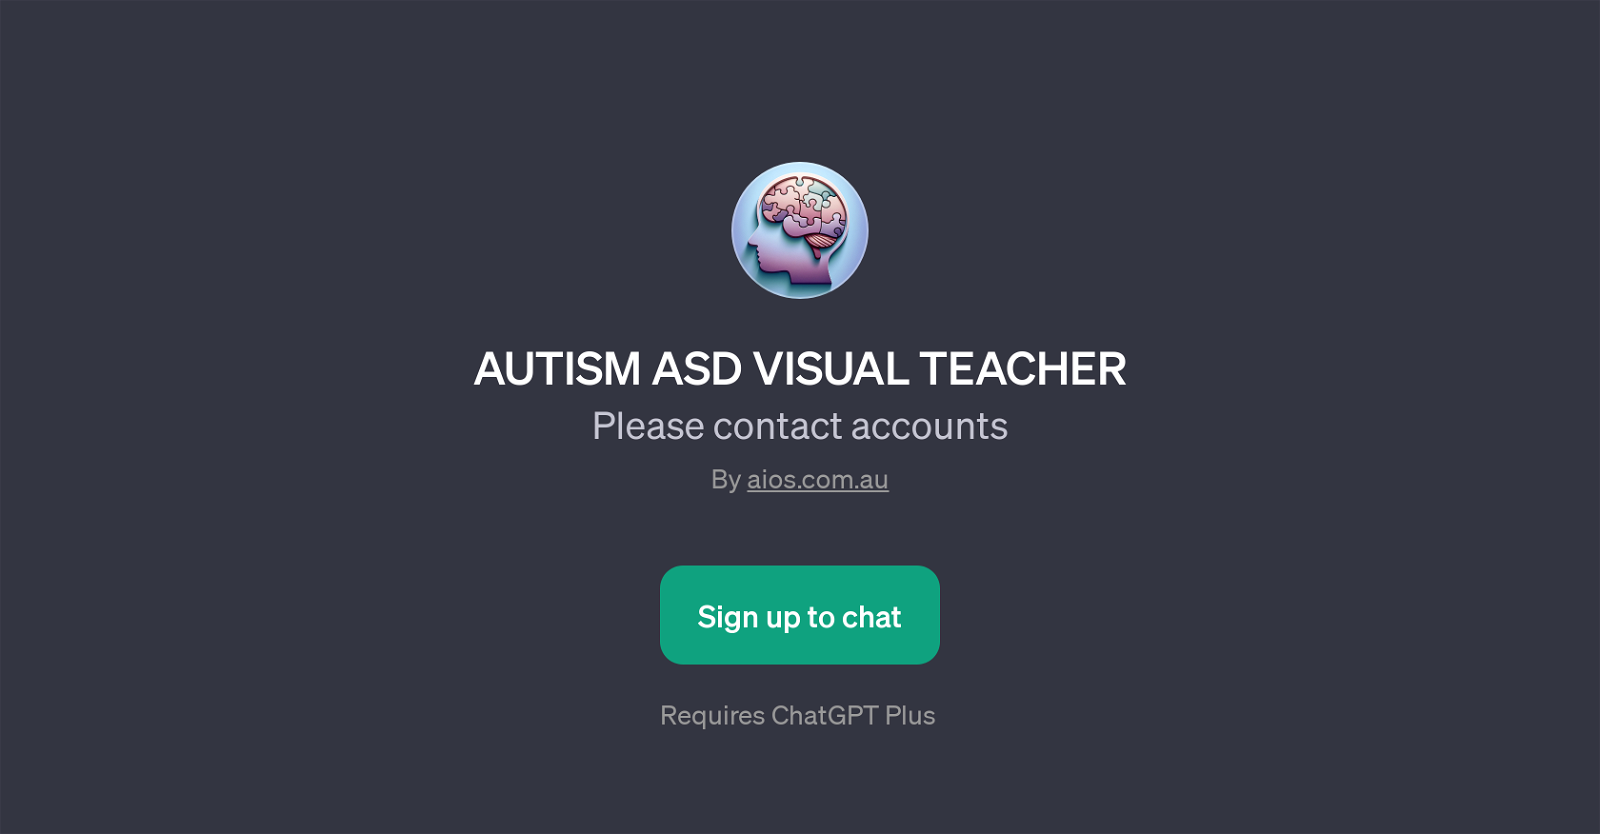 AUTISM ASD VISUAL TEACHER website